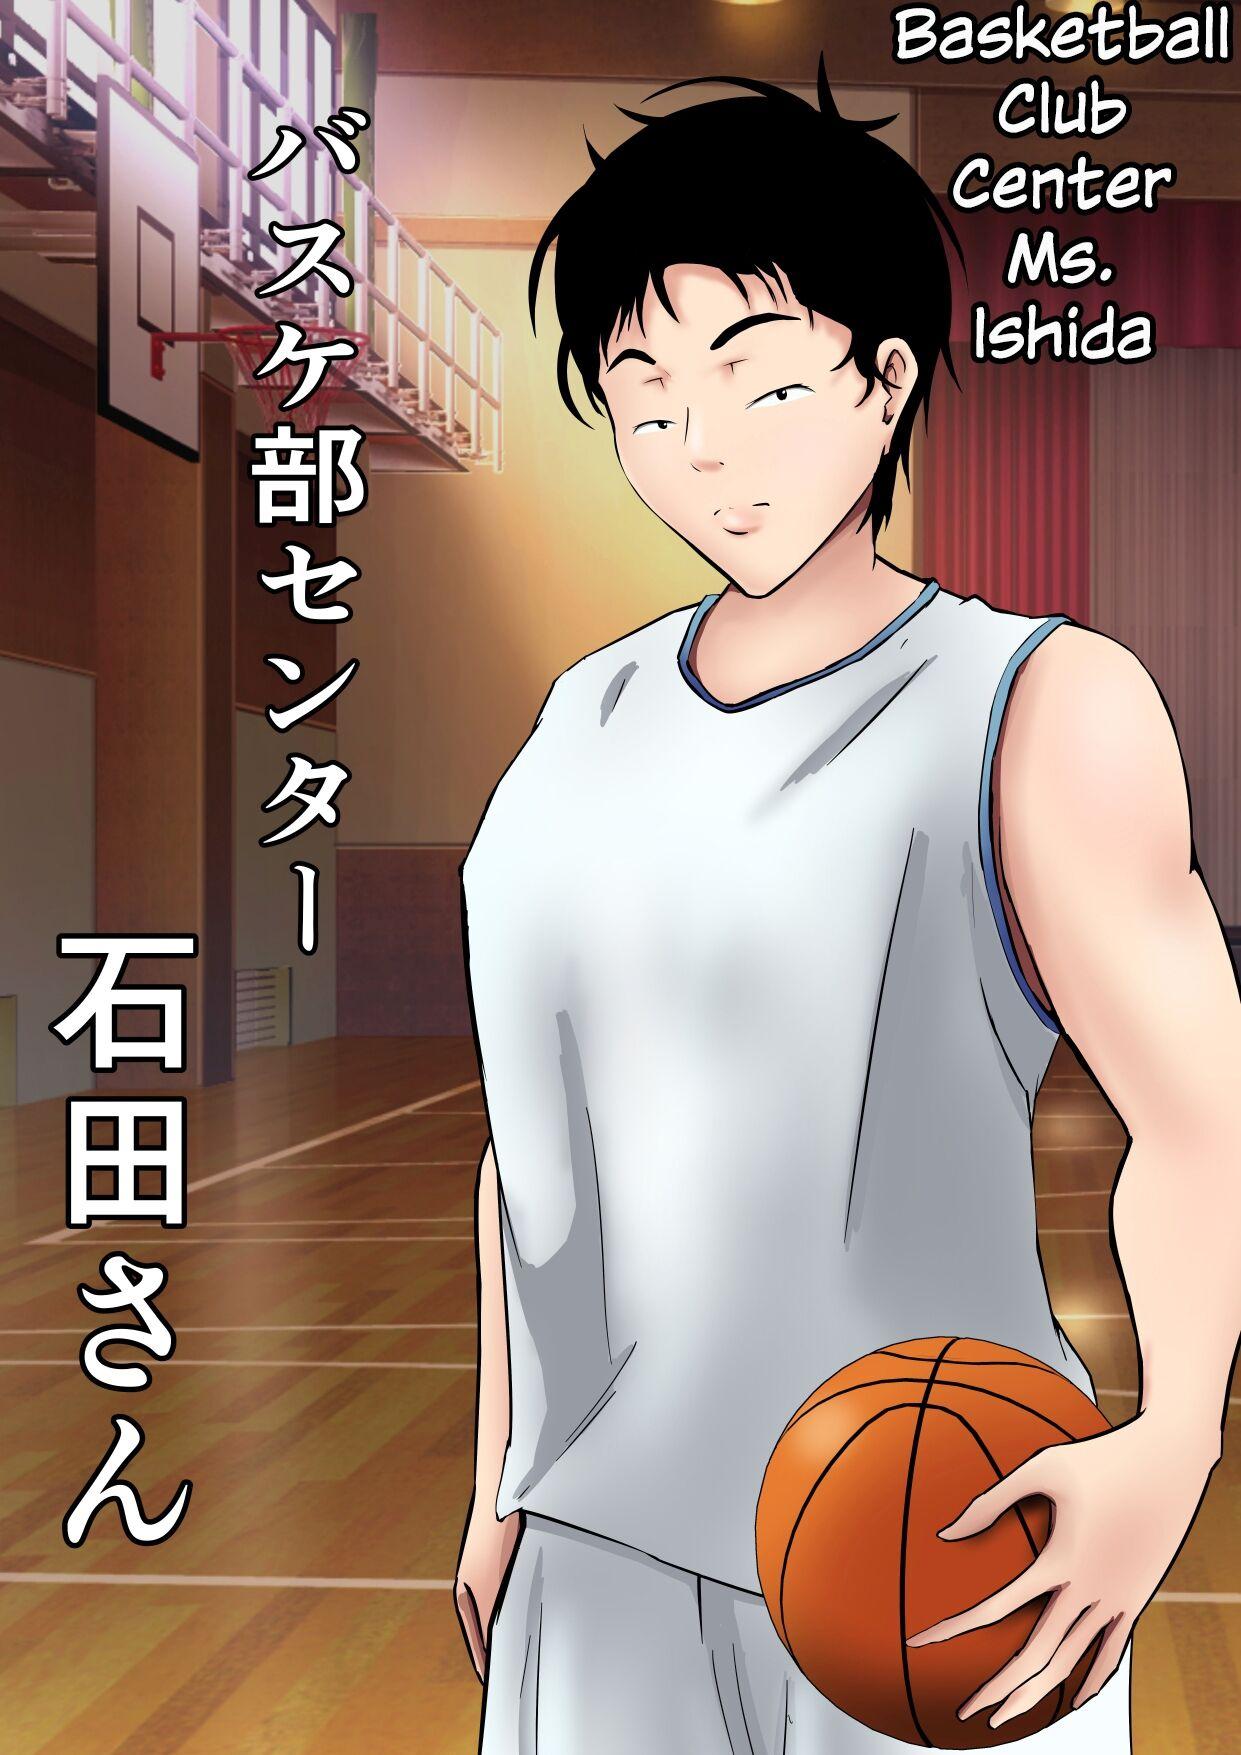 [Pentacle (Shimipan)] Baske-bu Center Ishida-san | Basketball Club Center Ms. Ishida [English] 0